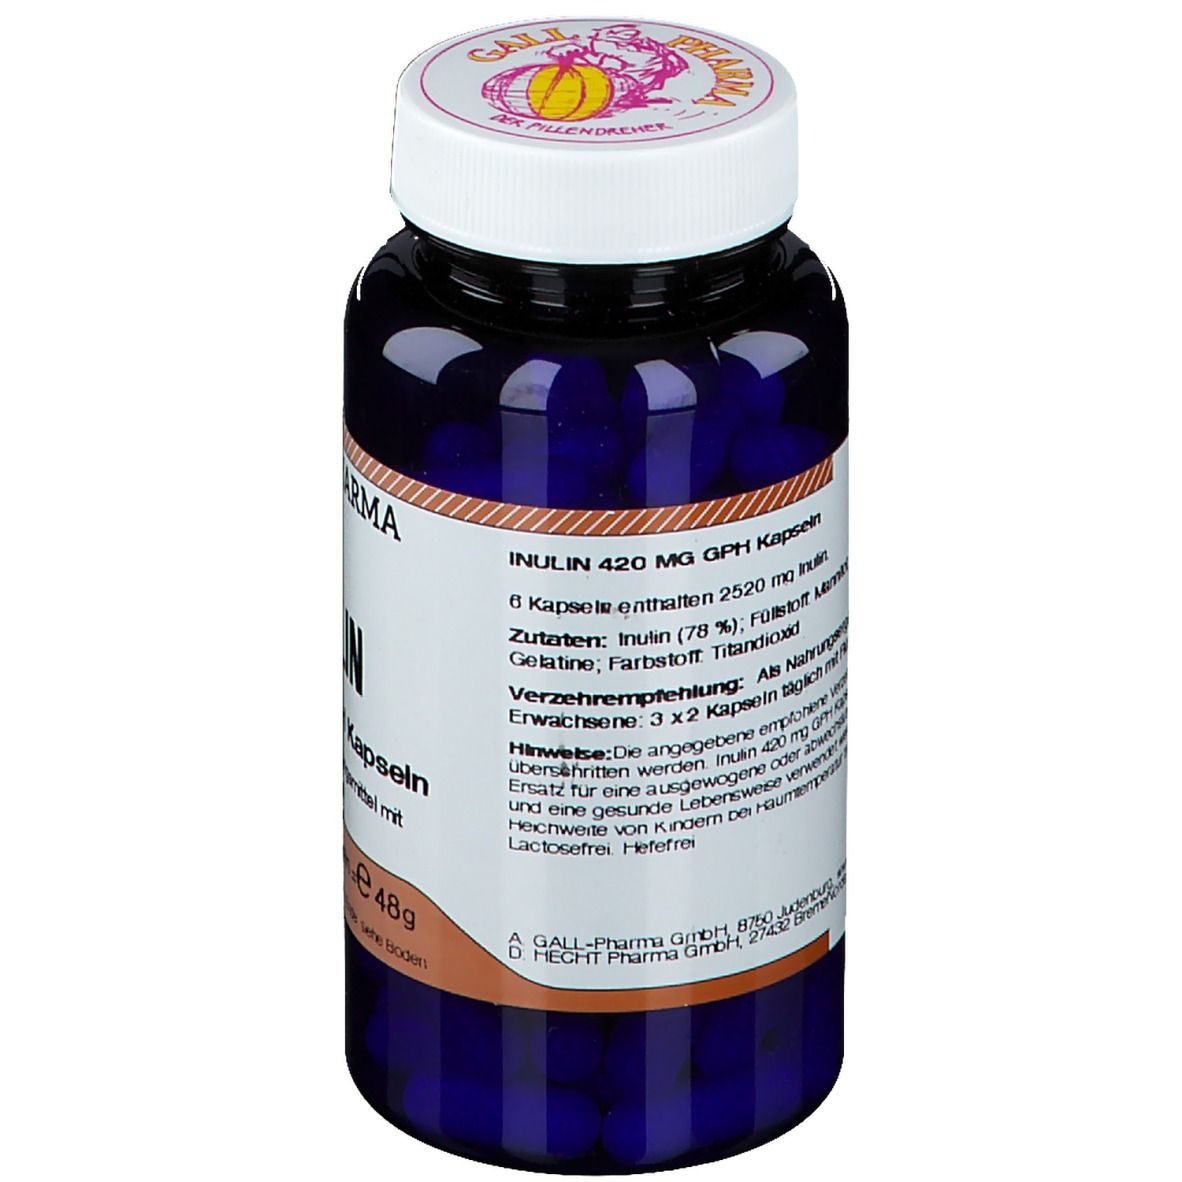 GALL PHARMA Inulin 420 mg GPH Kapseln